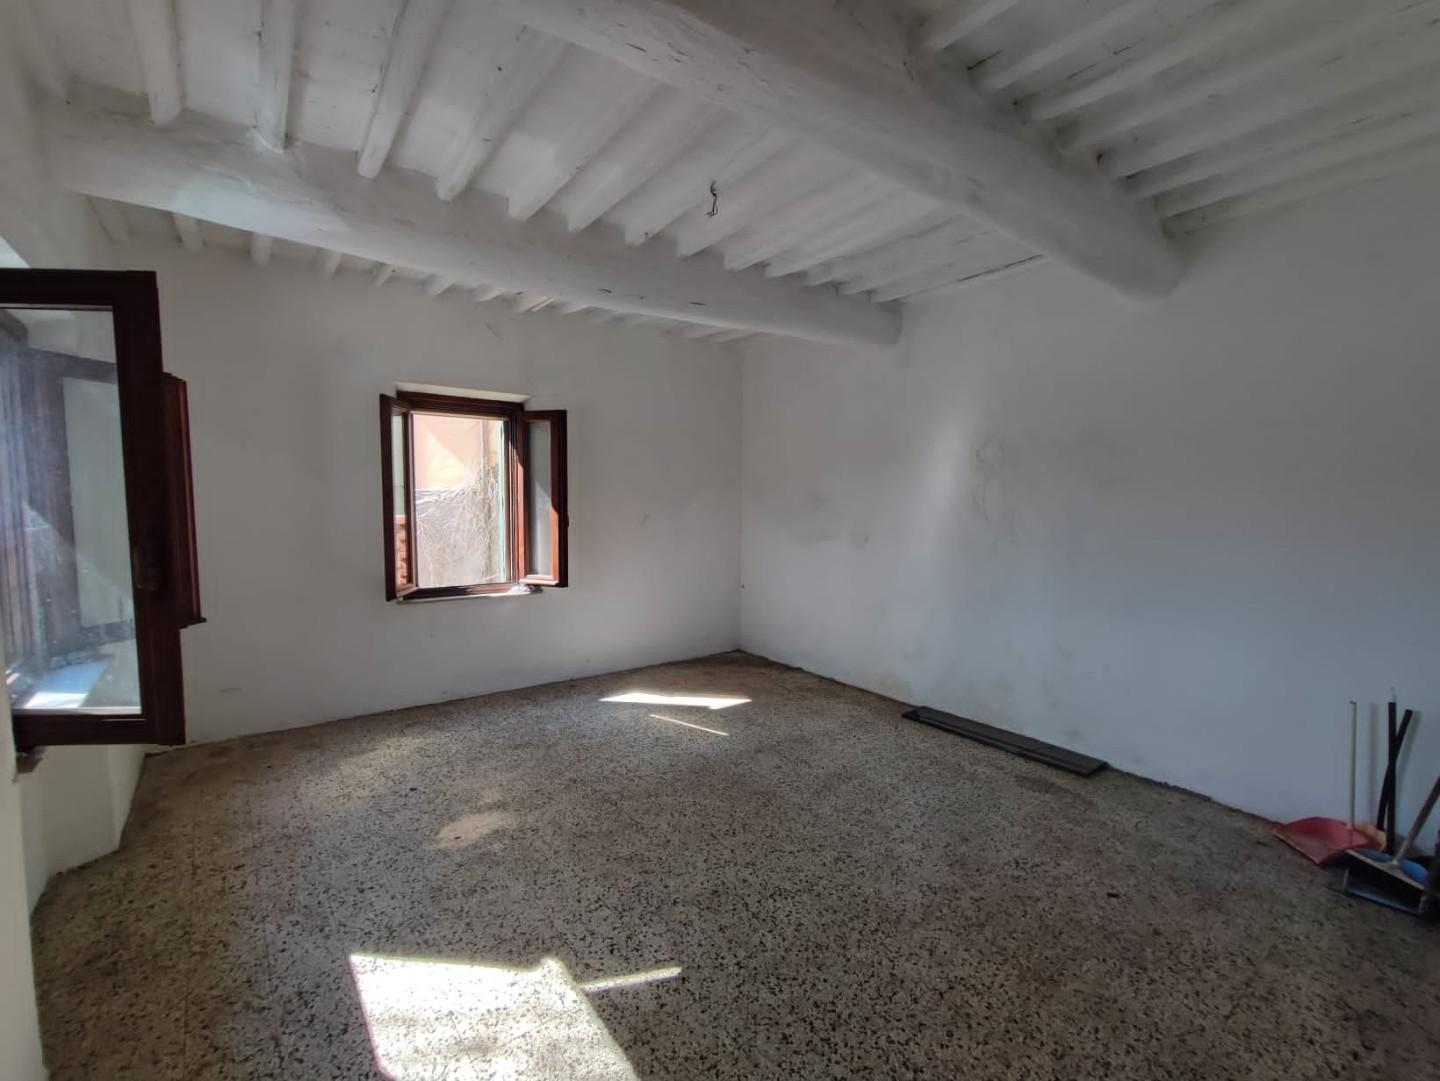 Single-family house for sale in Crespina Lorenzana (PI)